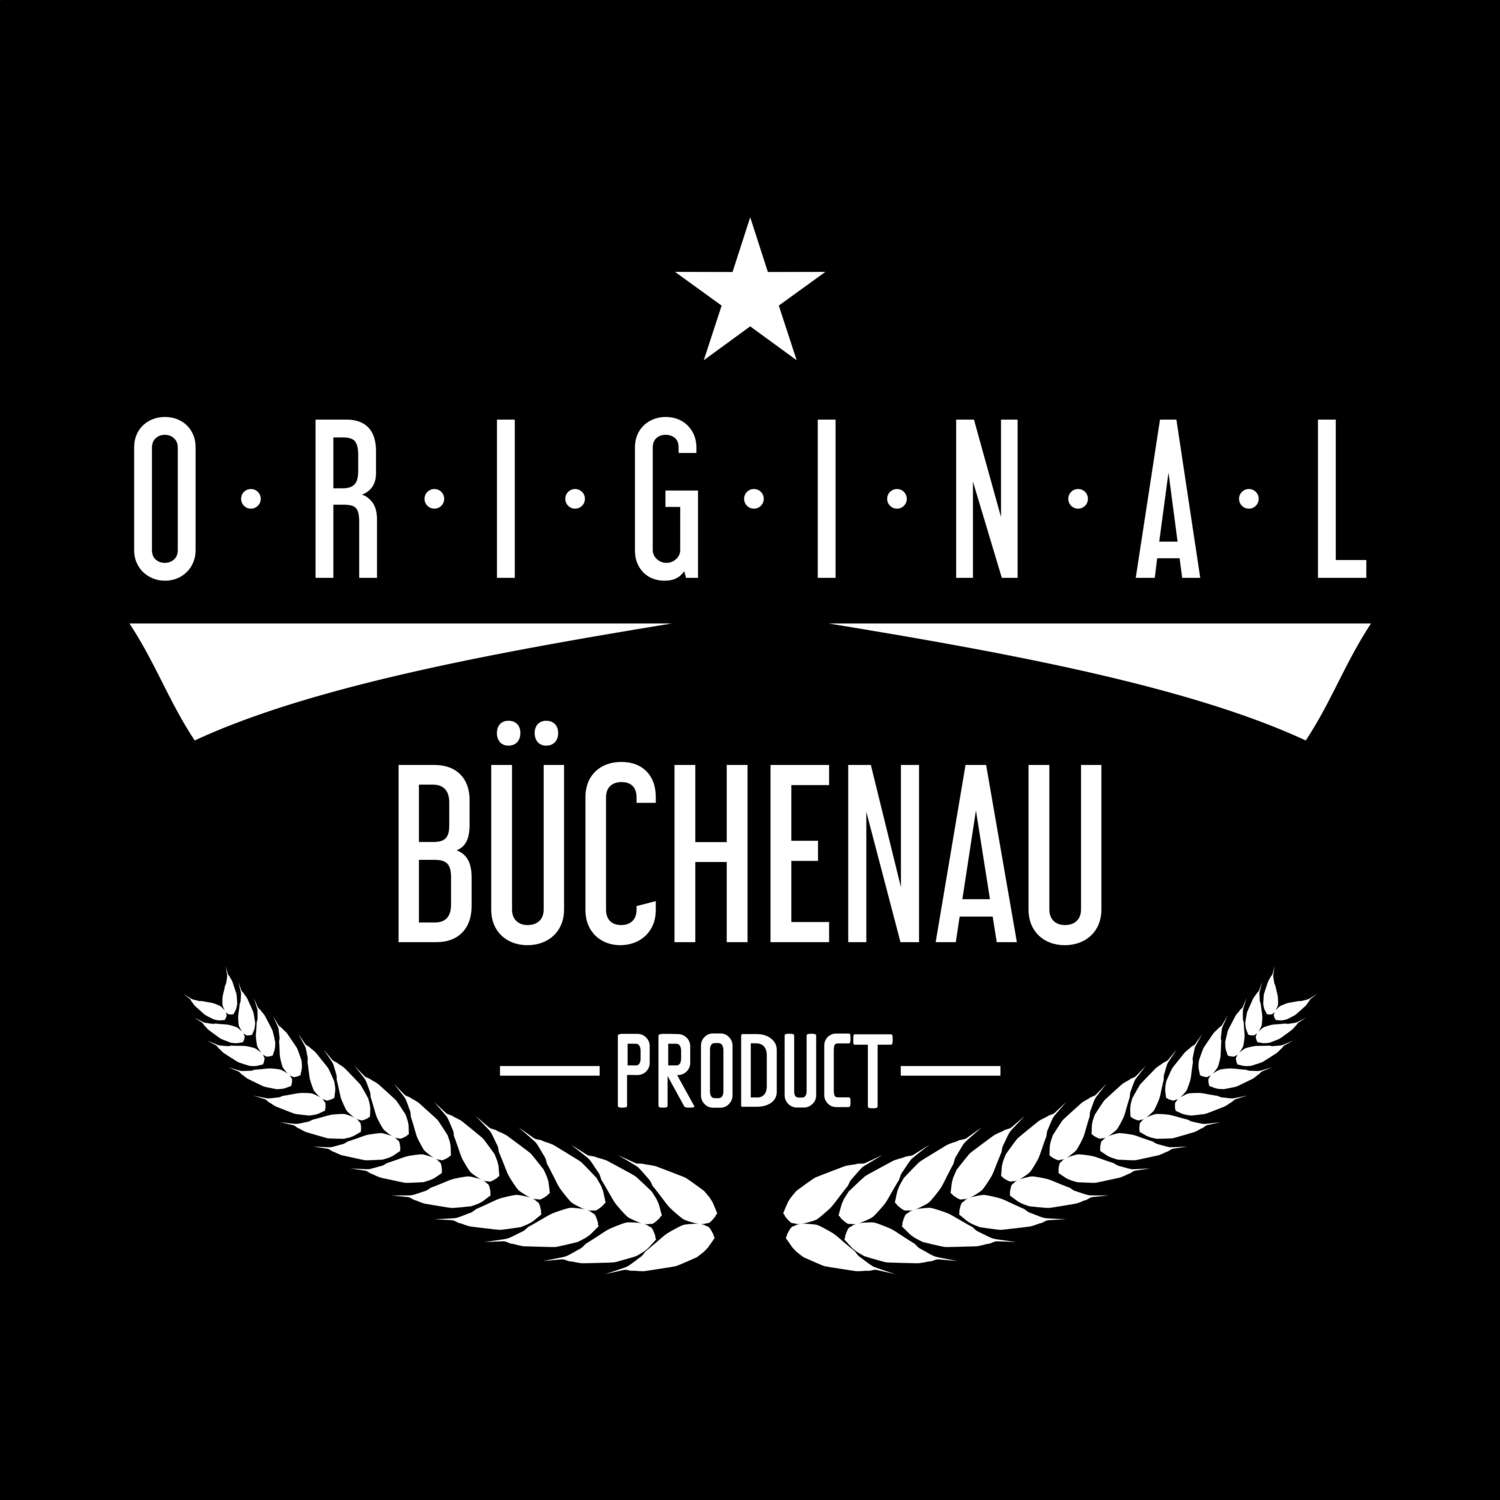 Büchenau T-Shirt »Original Product«